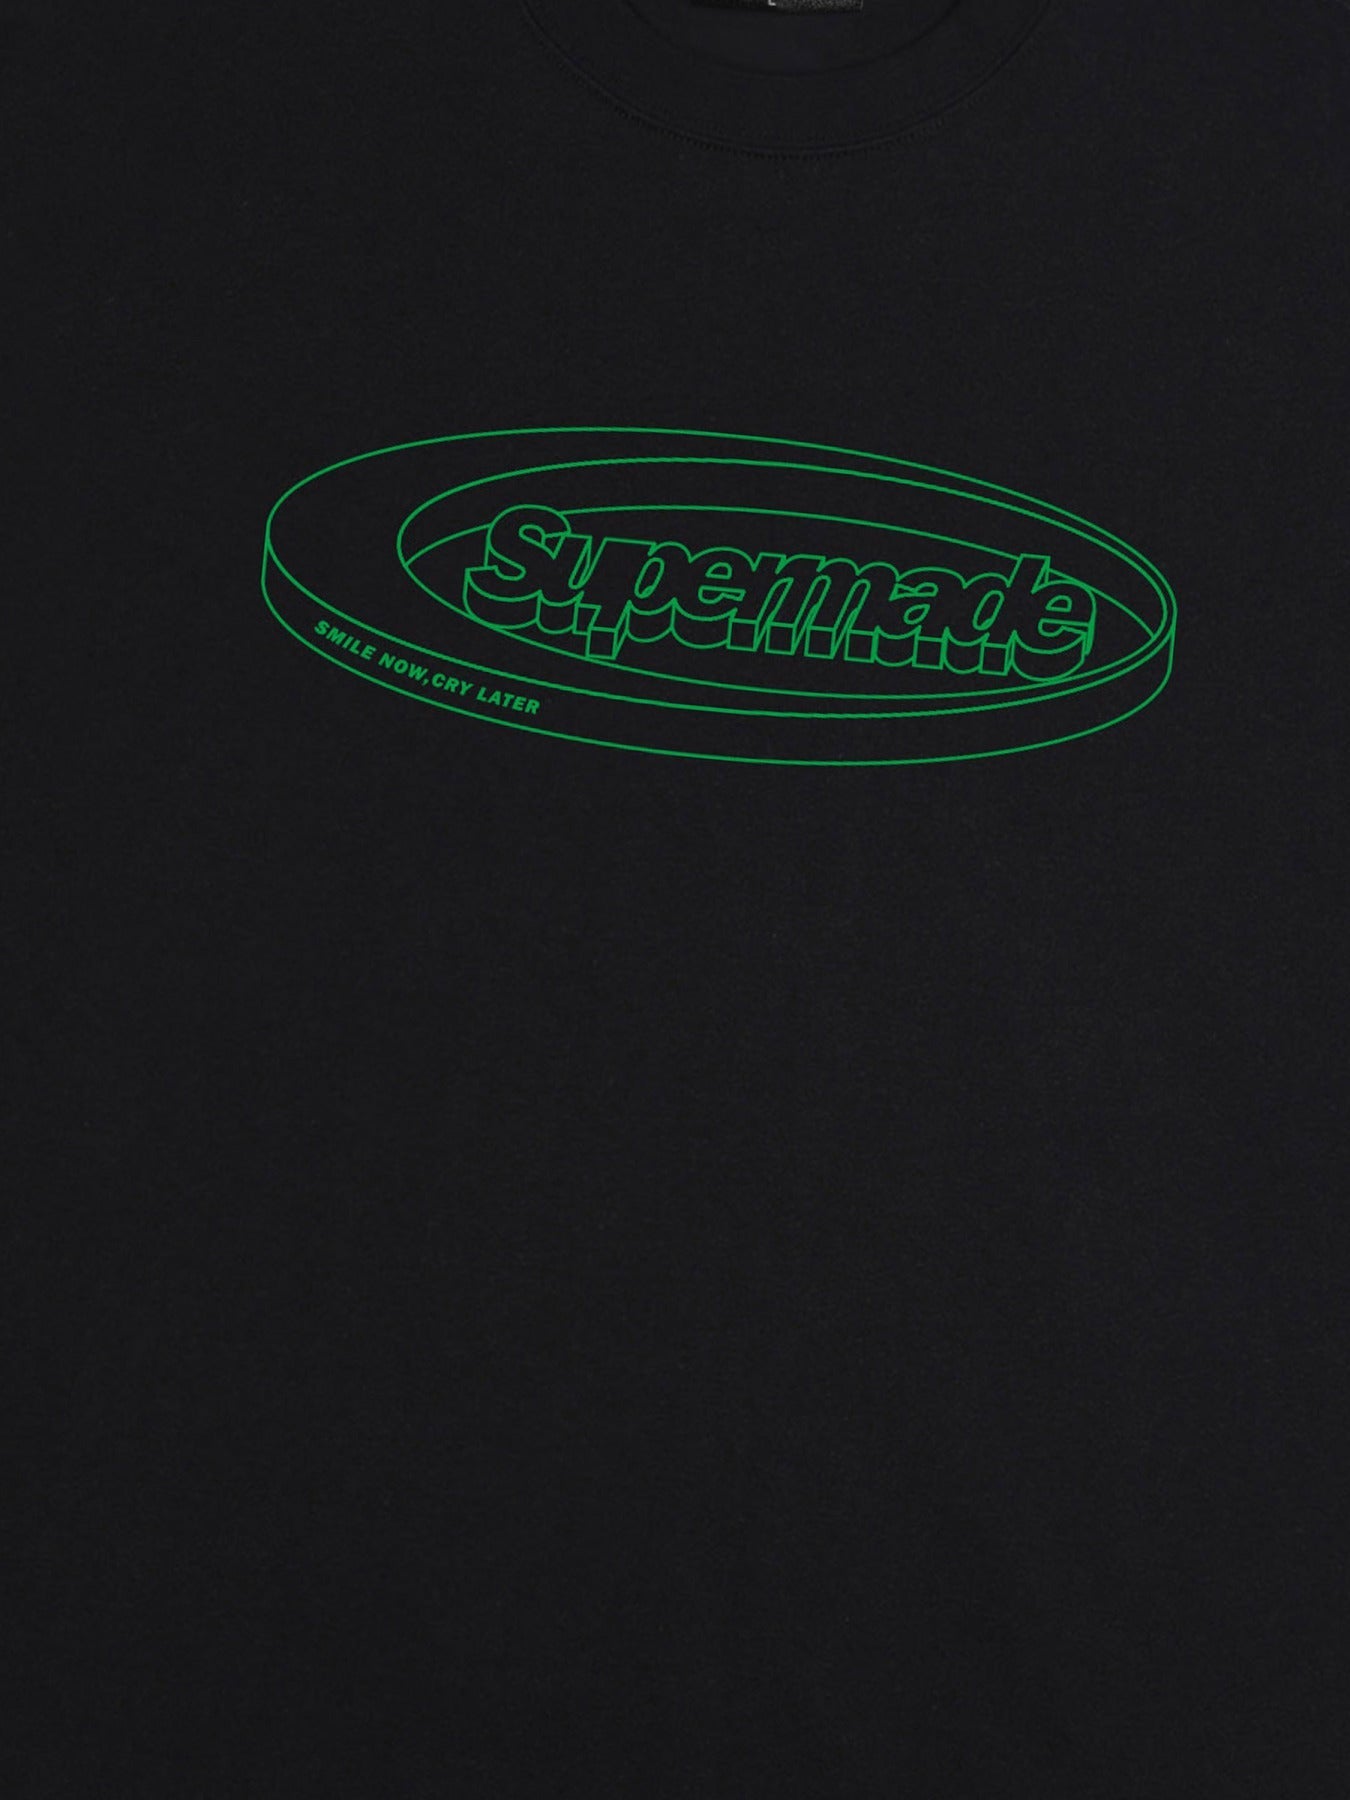 Thesupermade Font Logo Printing T-shirt